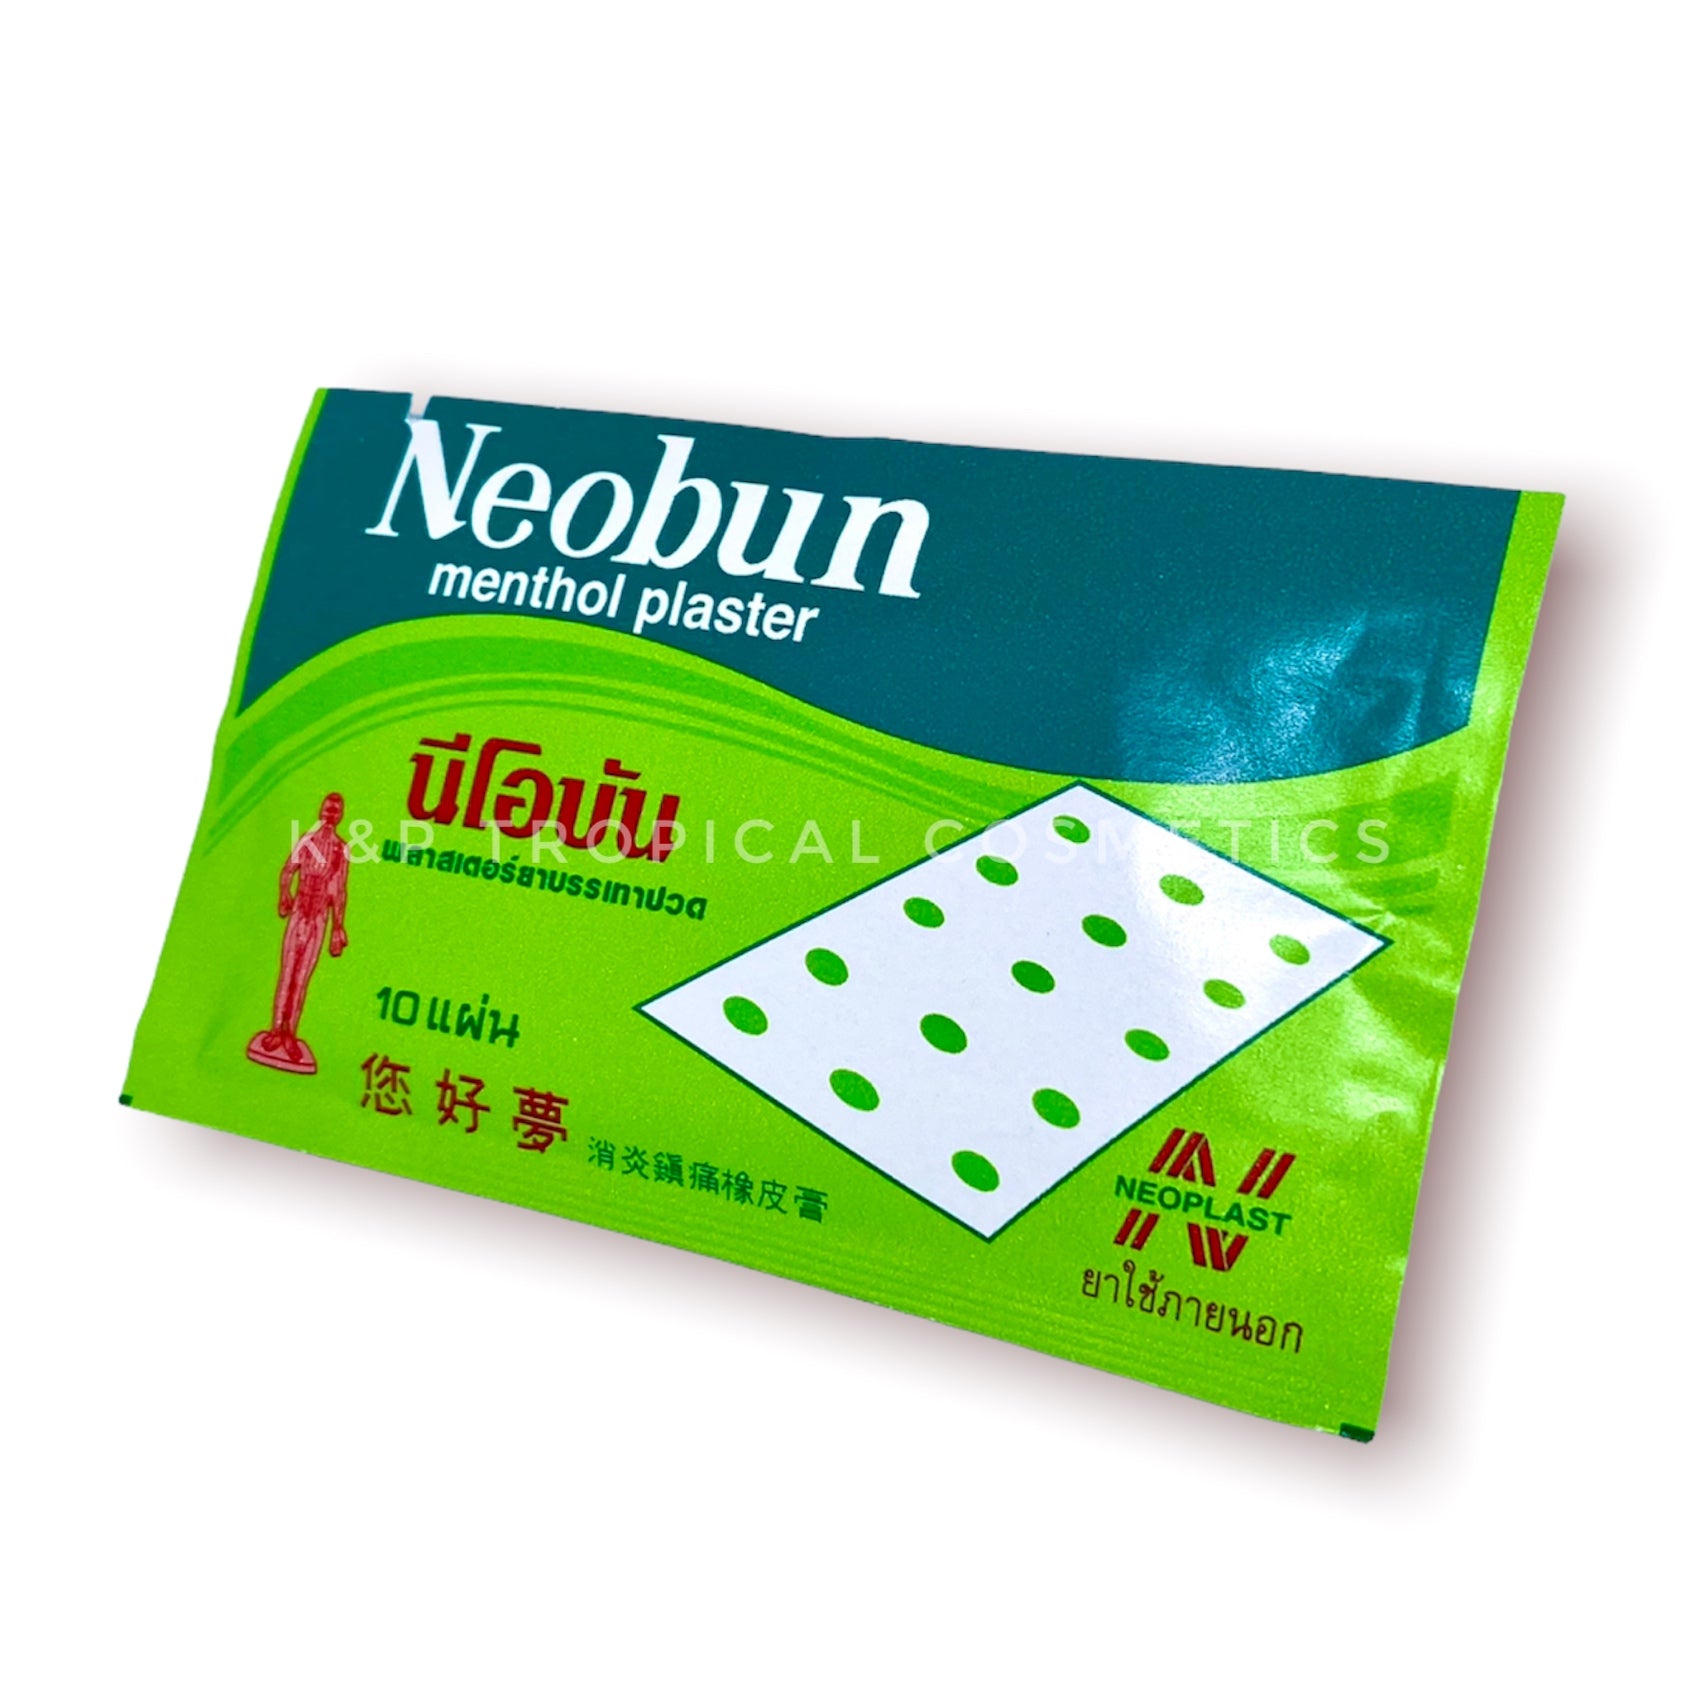 Neobun Menthol Plaster 10 pcs., Тайский обезболивающий пластырь "Необун" с ментолом 10 шт.